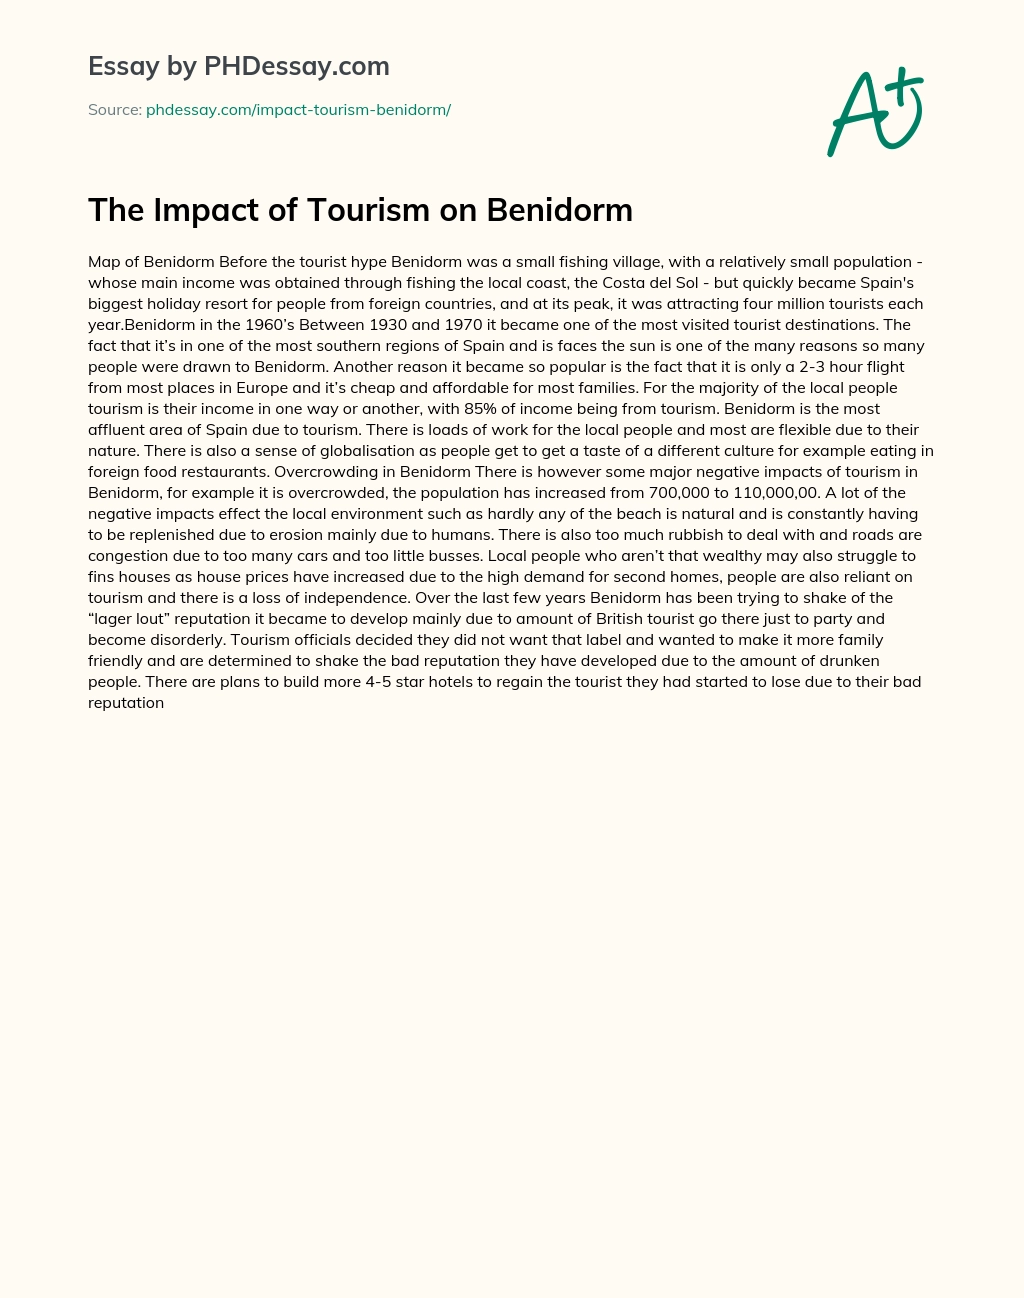 The Impact of Tourism on Benidorm essay